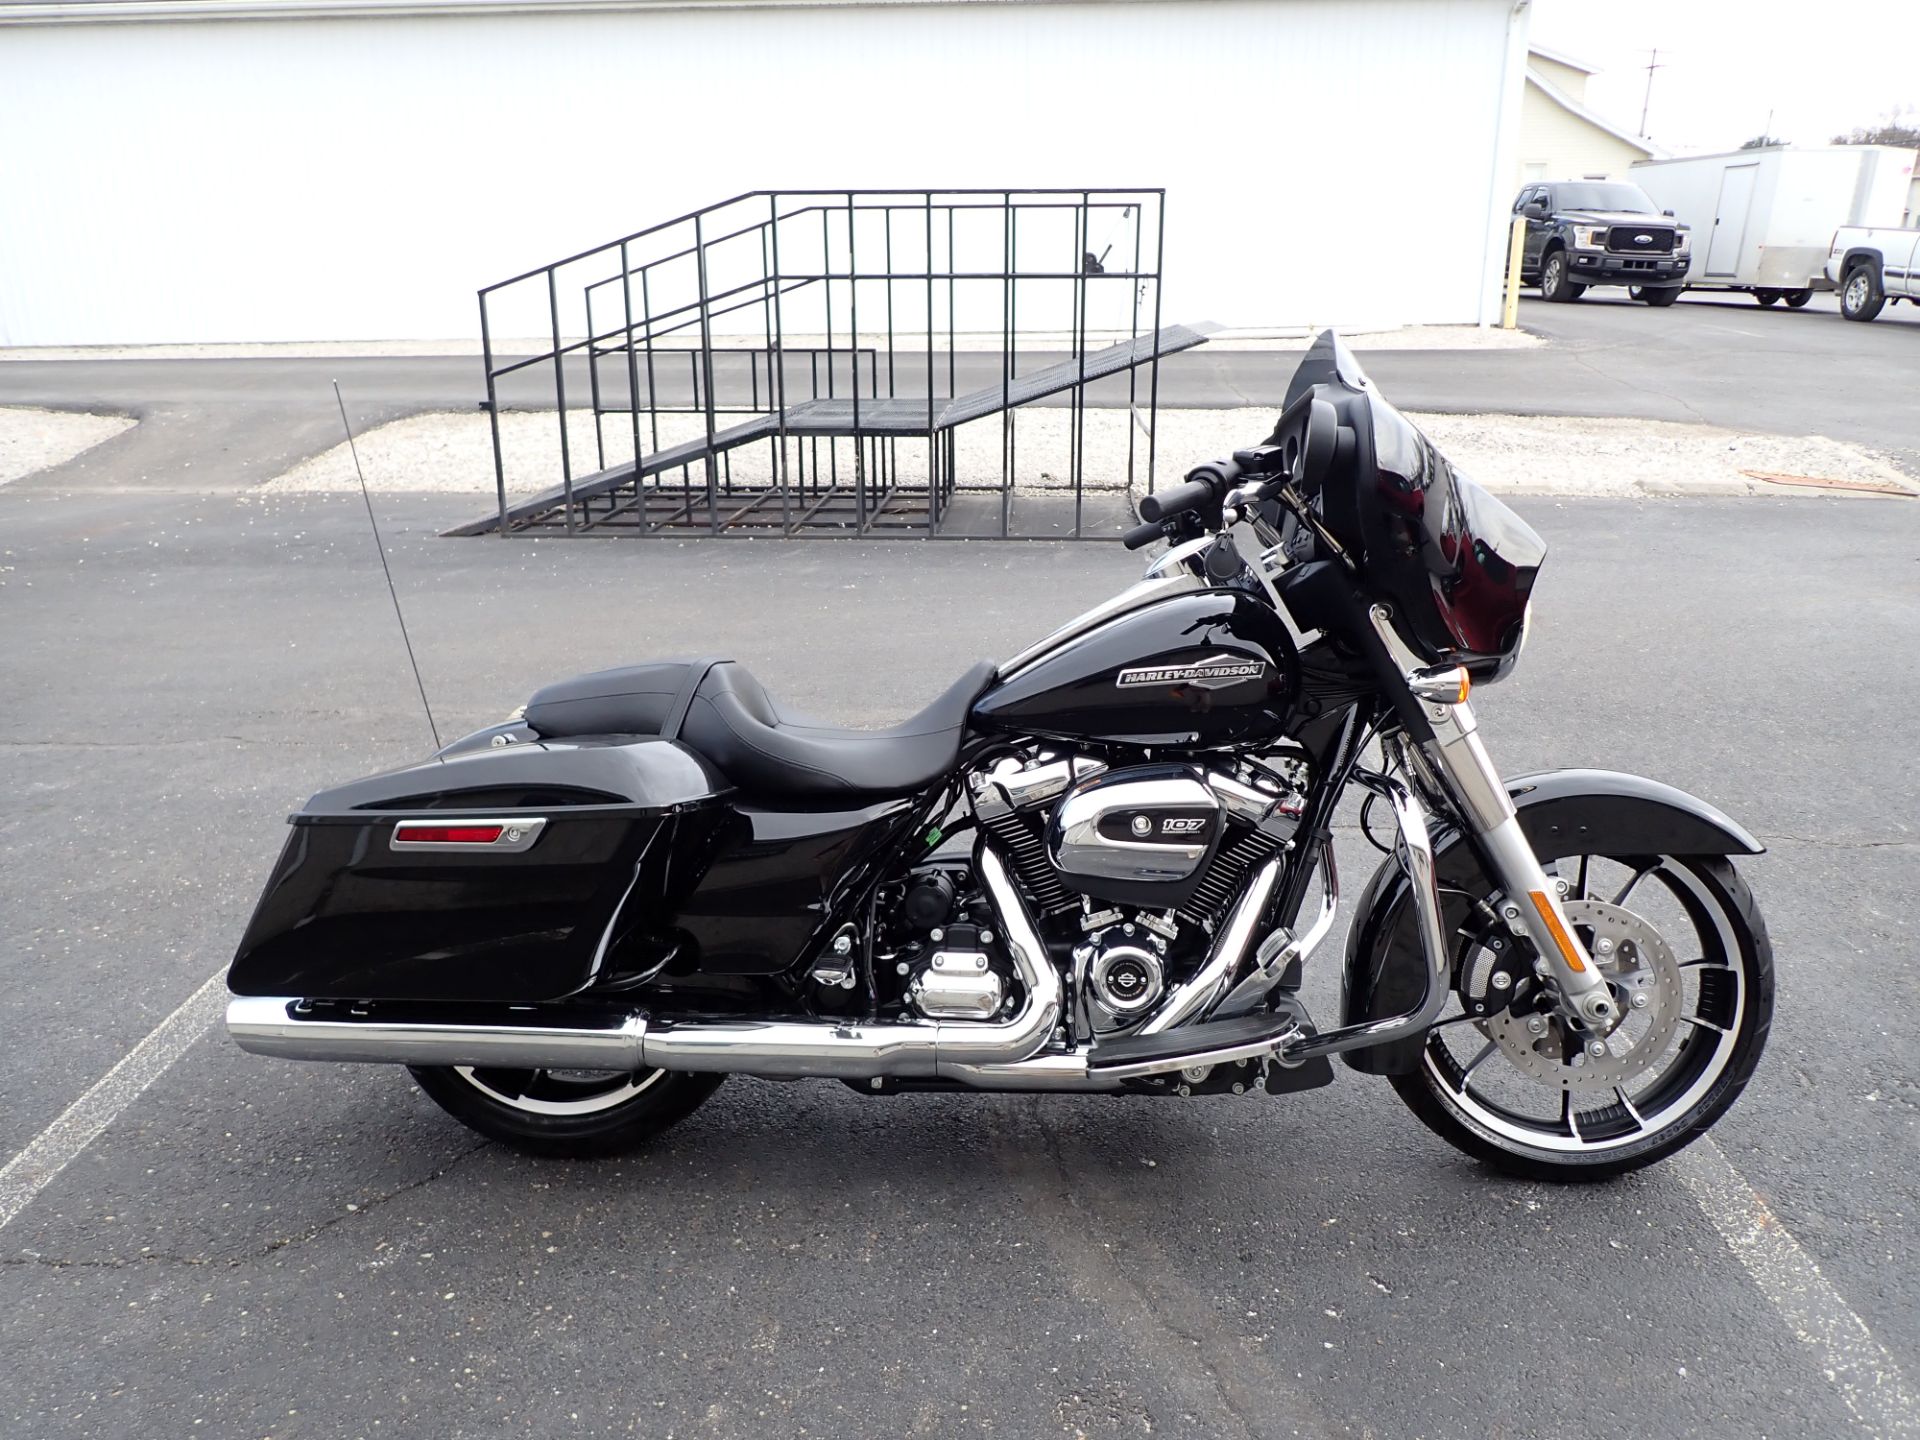 2021 Harley-Davidson Street Glide® in Massillon, Ohio - Photo 1